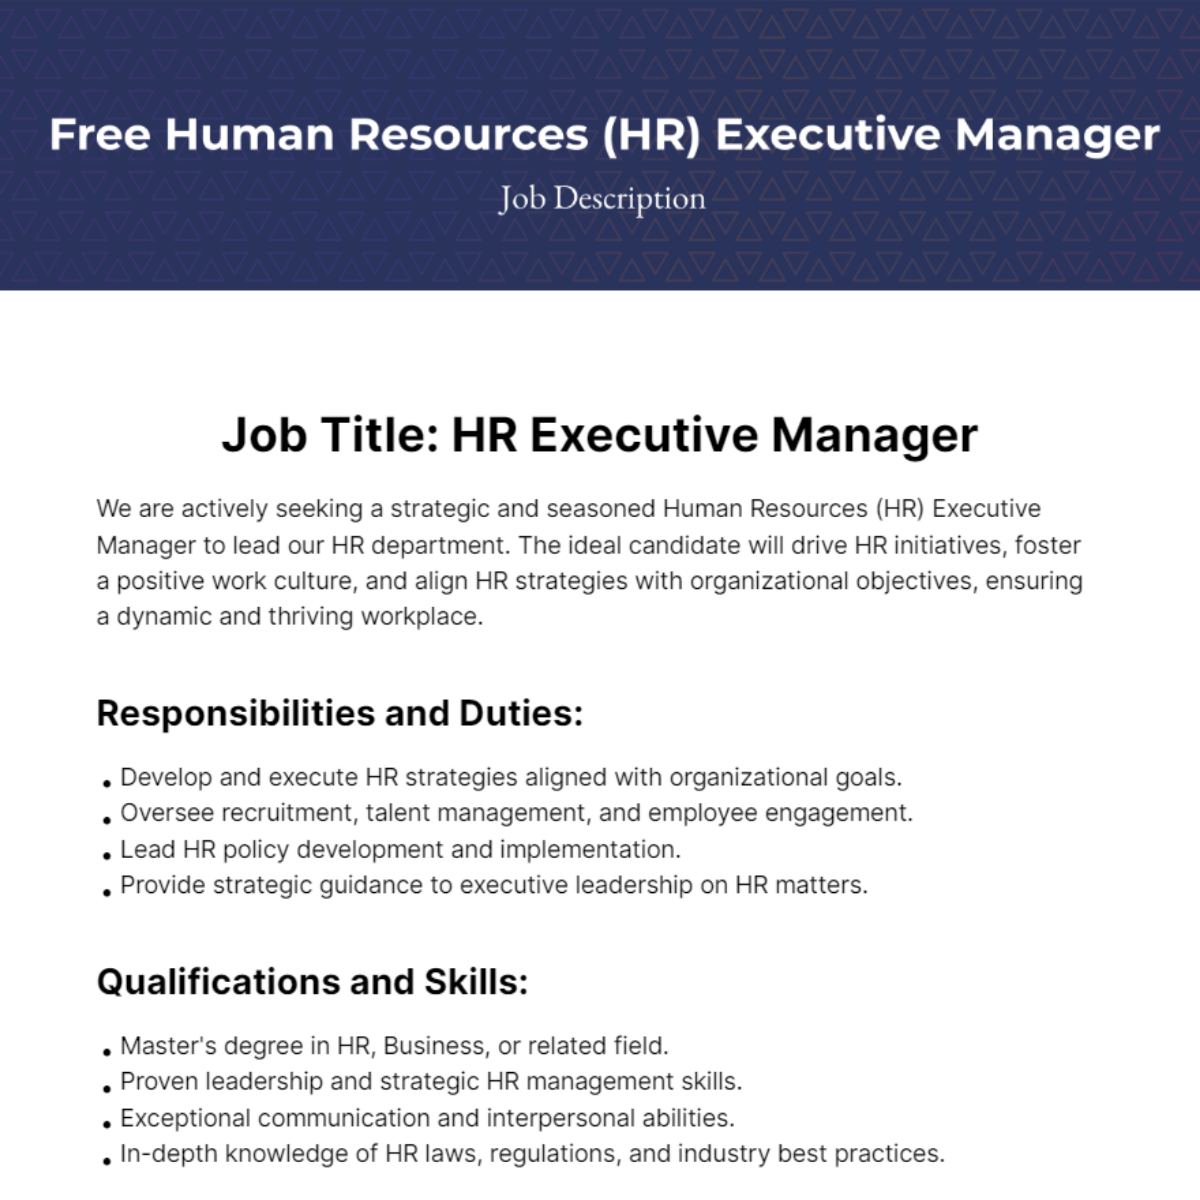 Human Resources (HR) Executive Manager Job Description Template